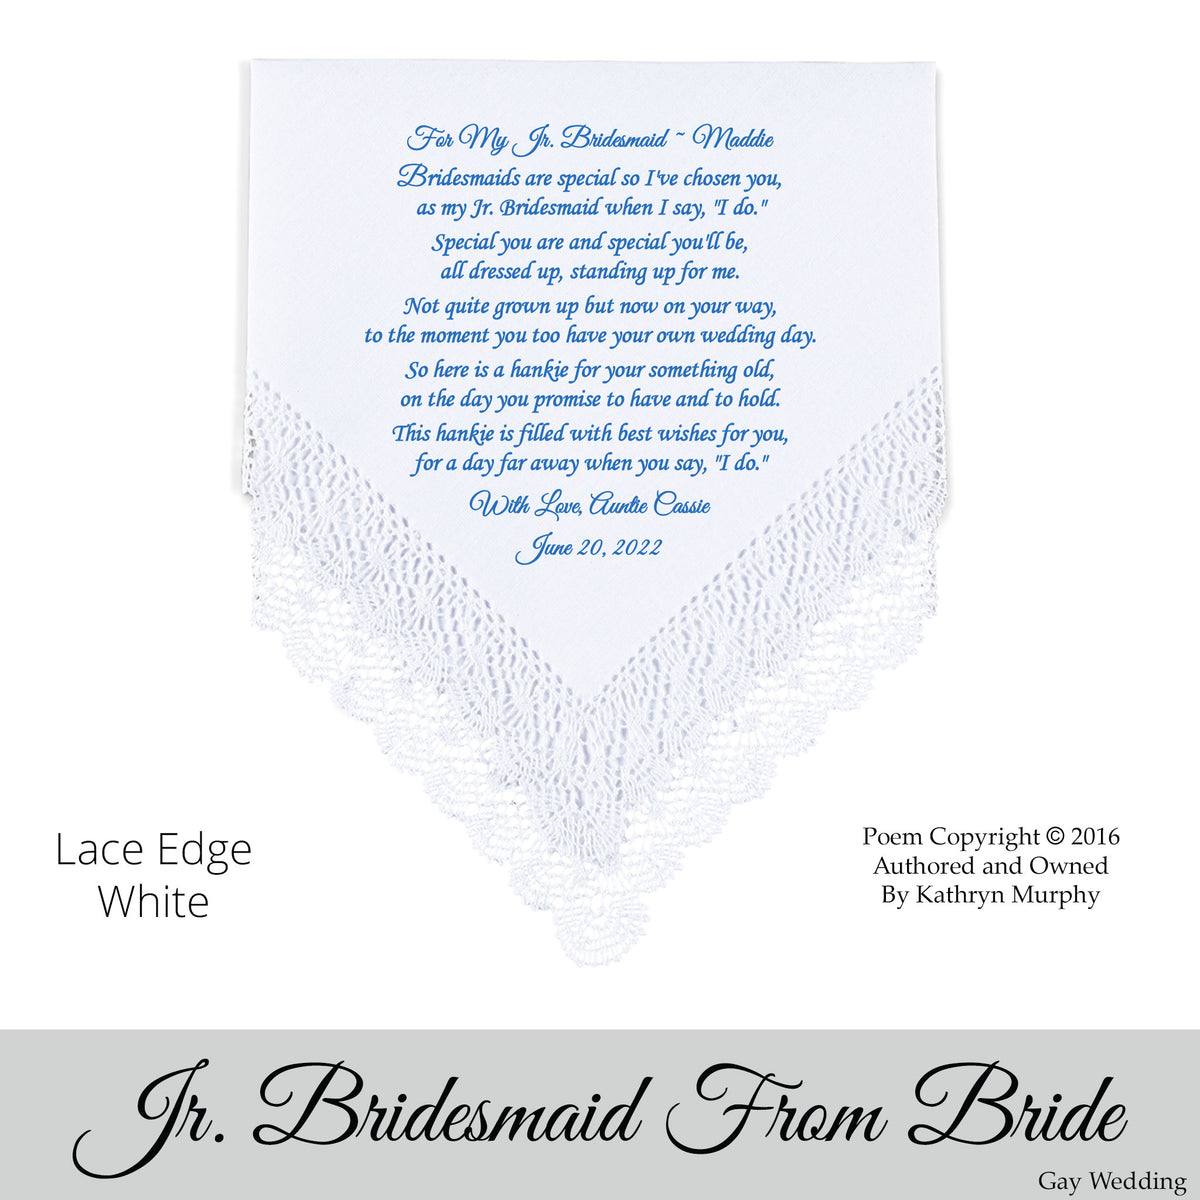 Gay Wedding Gift for the Jr. Bridesmaid poem printed wedding hankie